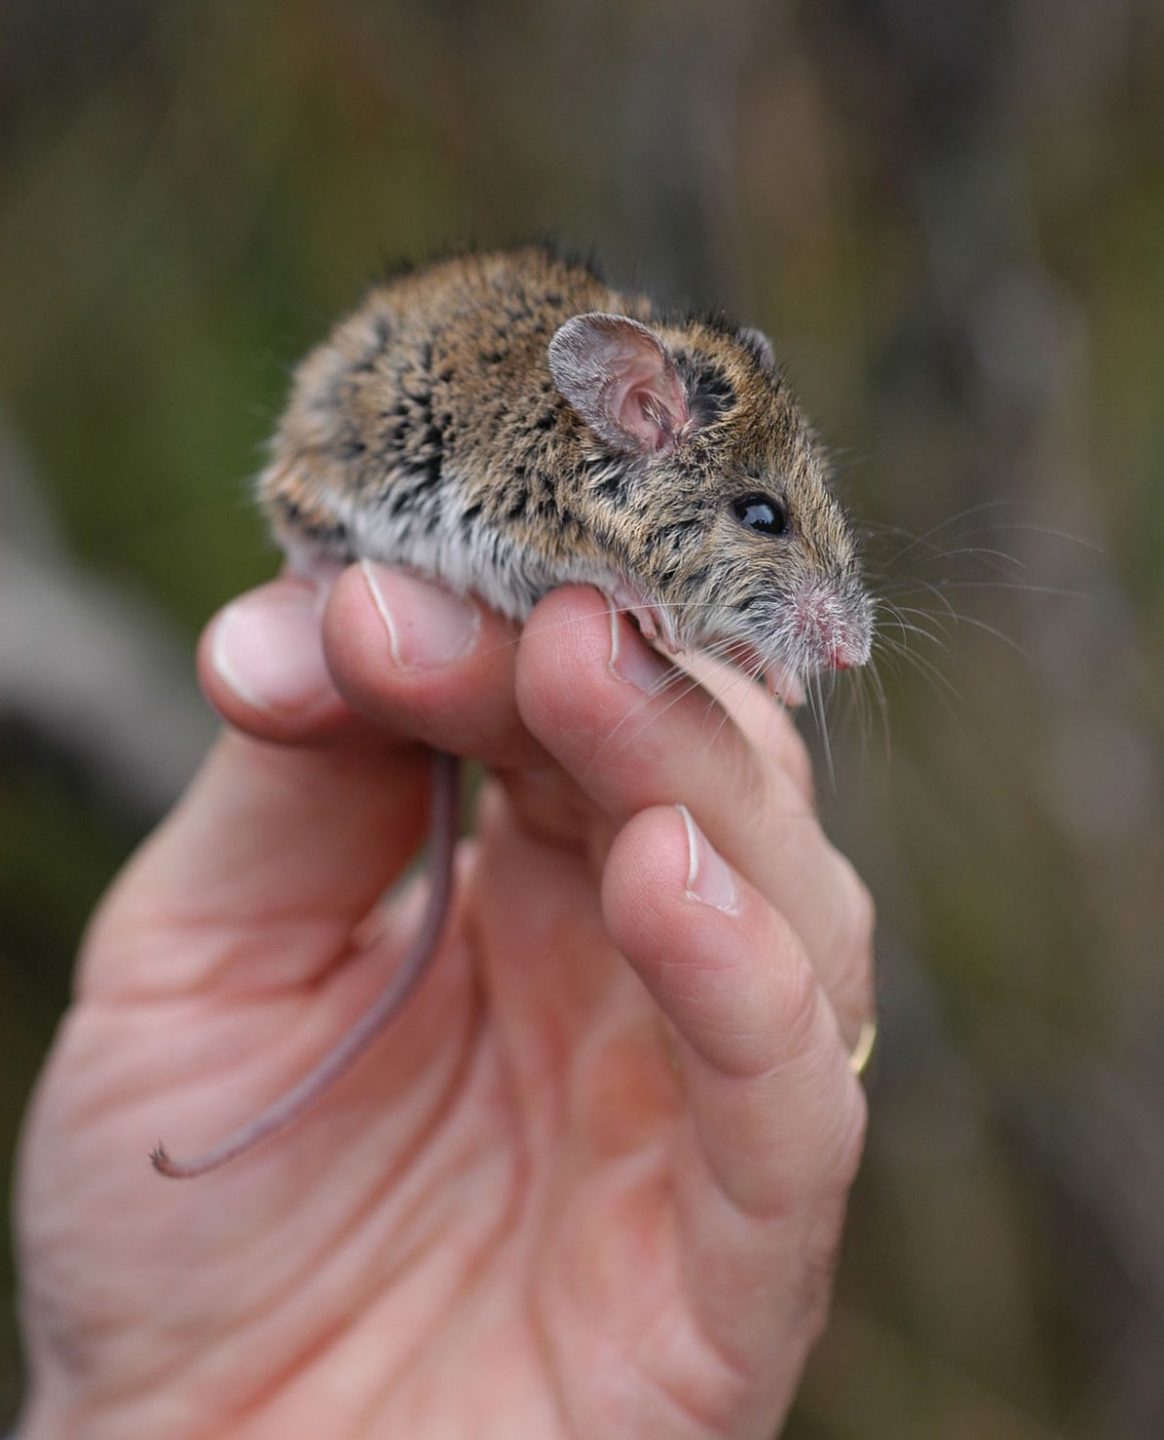 Fears grow as Australian native mouse remains